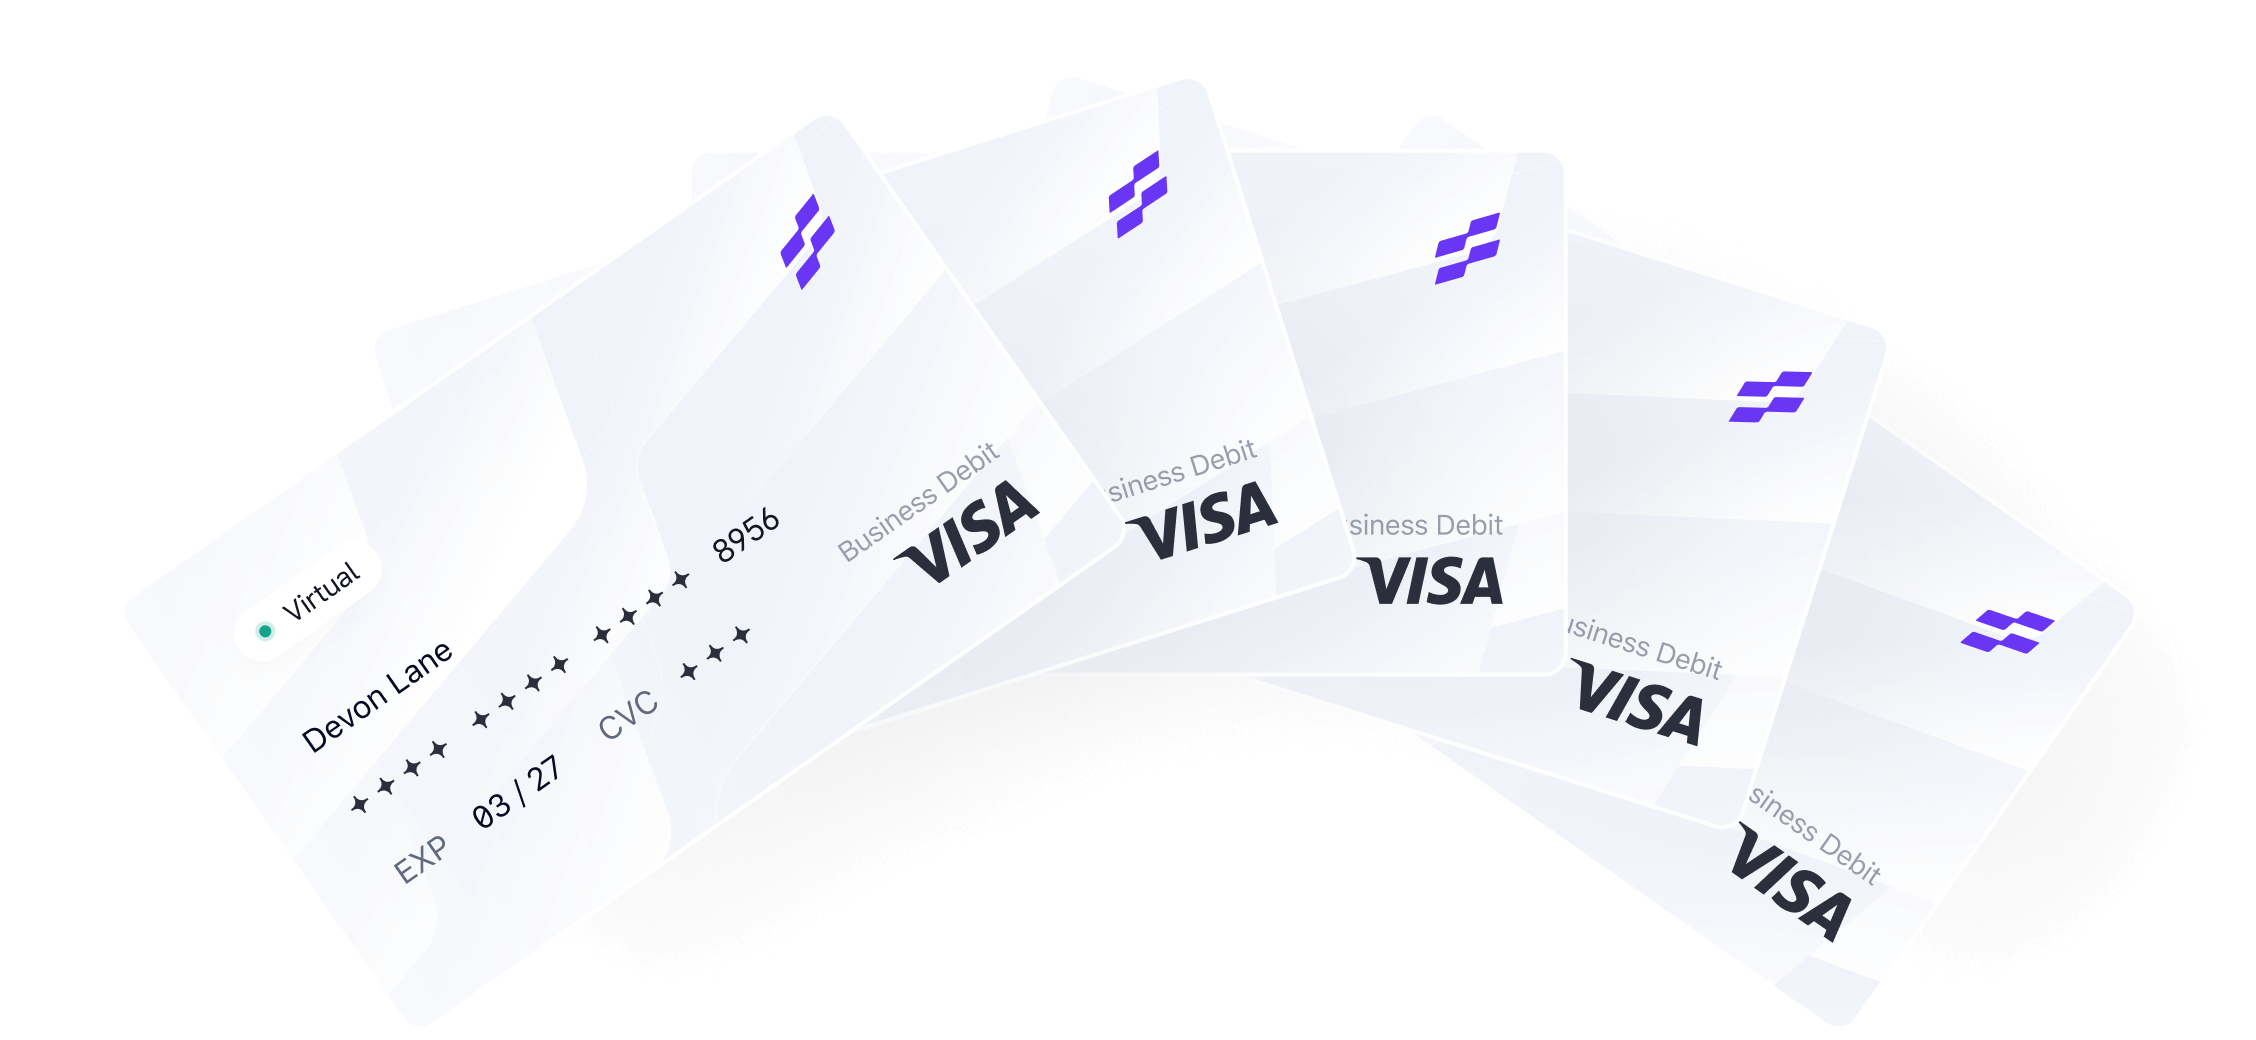 Onepaybank Business Debit Cards Illustration